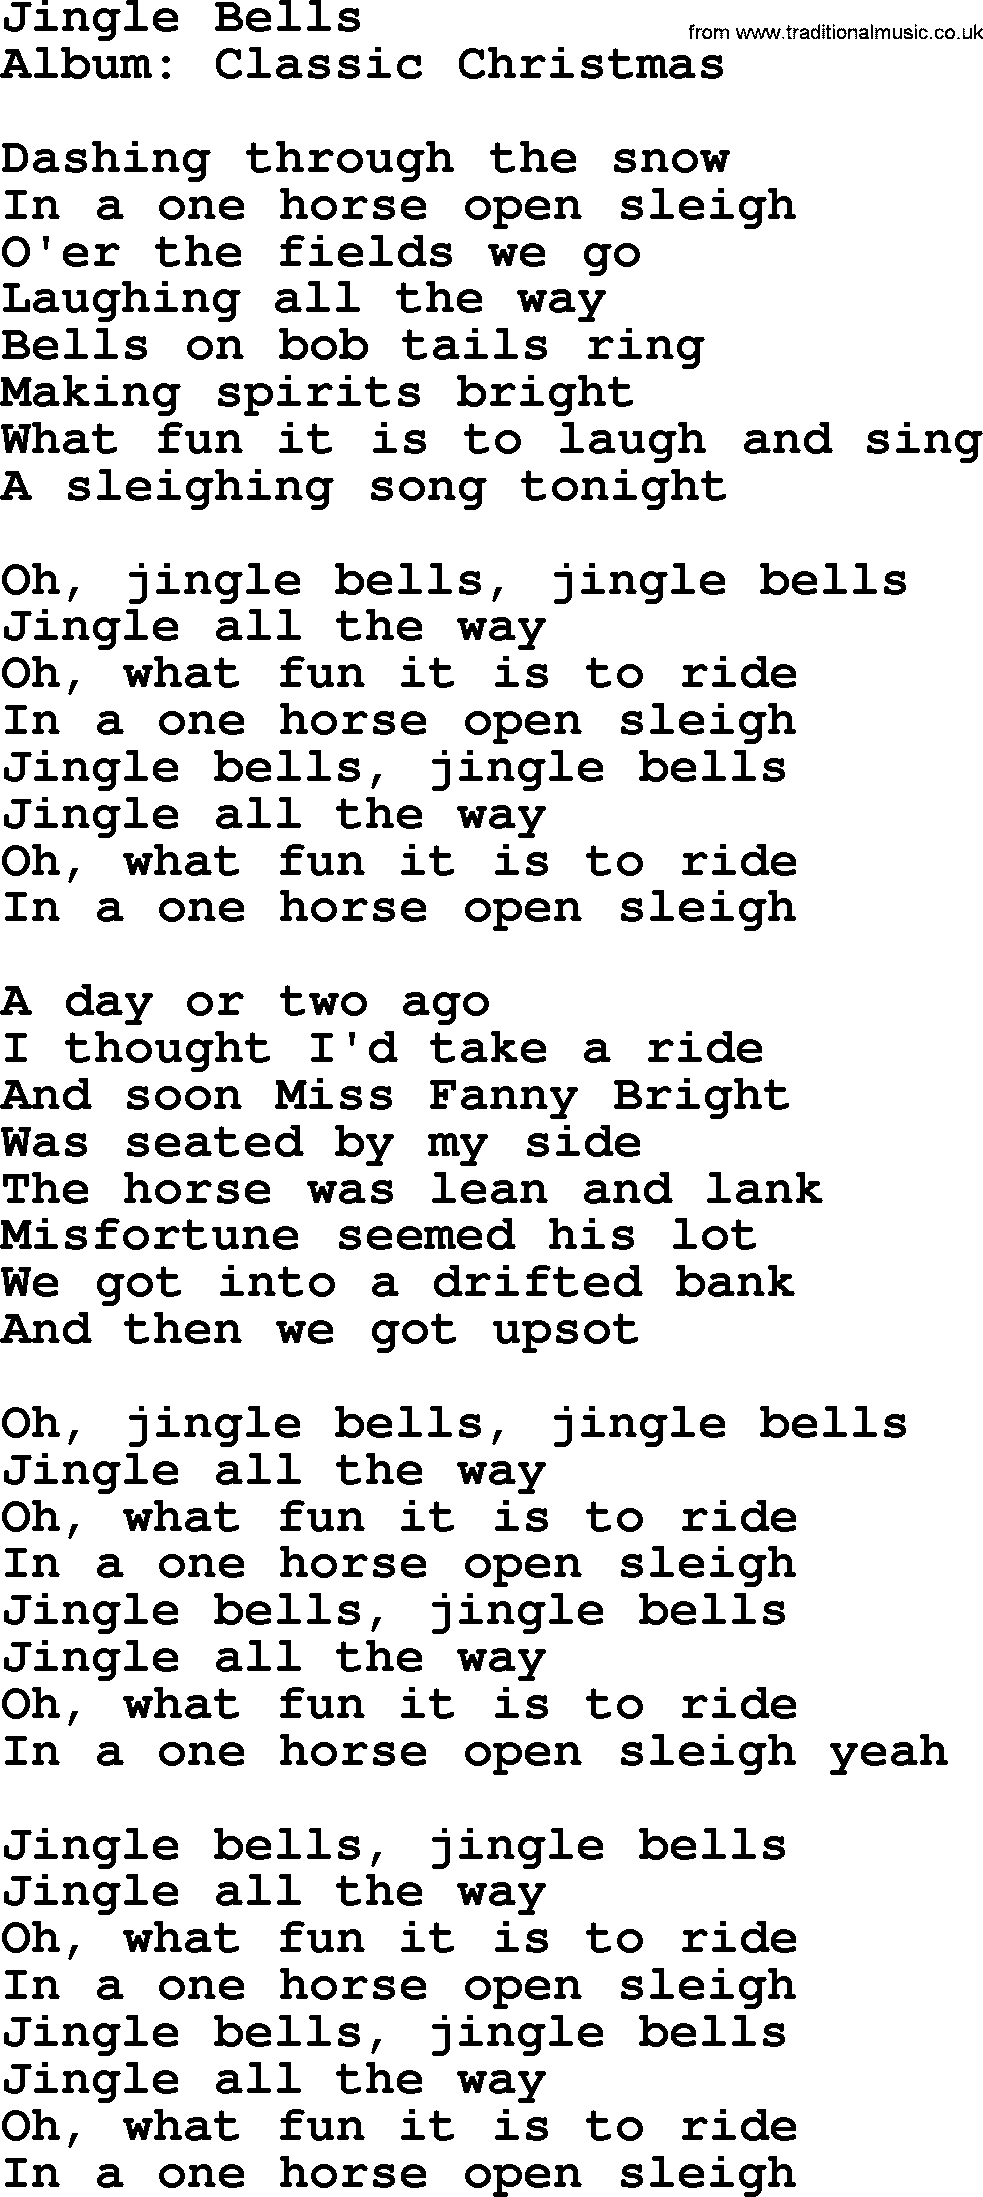 George Strait song: Jingle Bells, lyrics